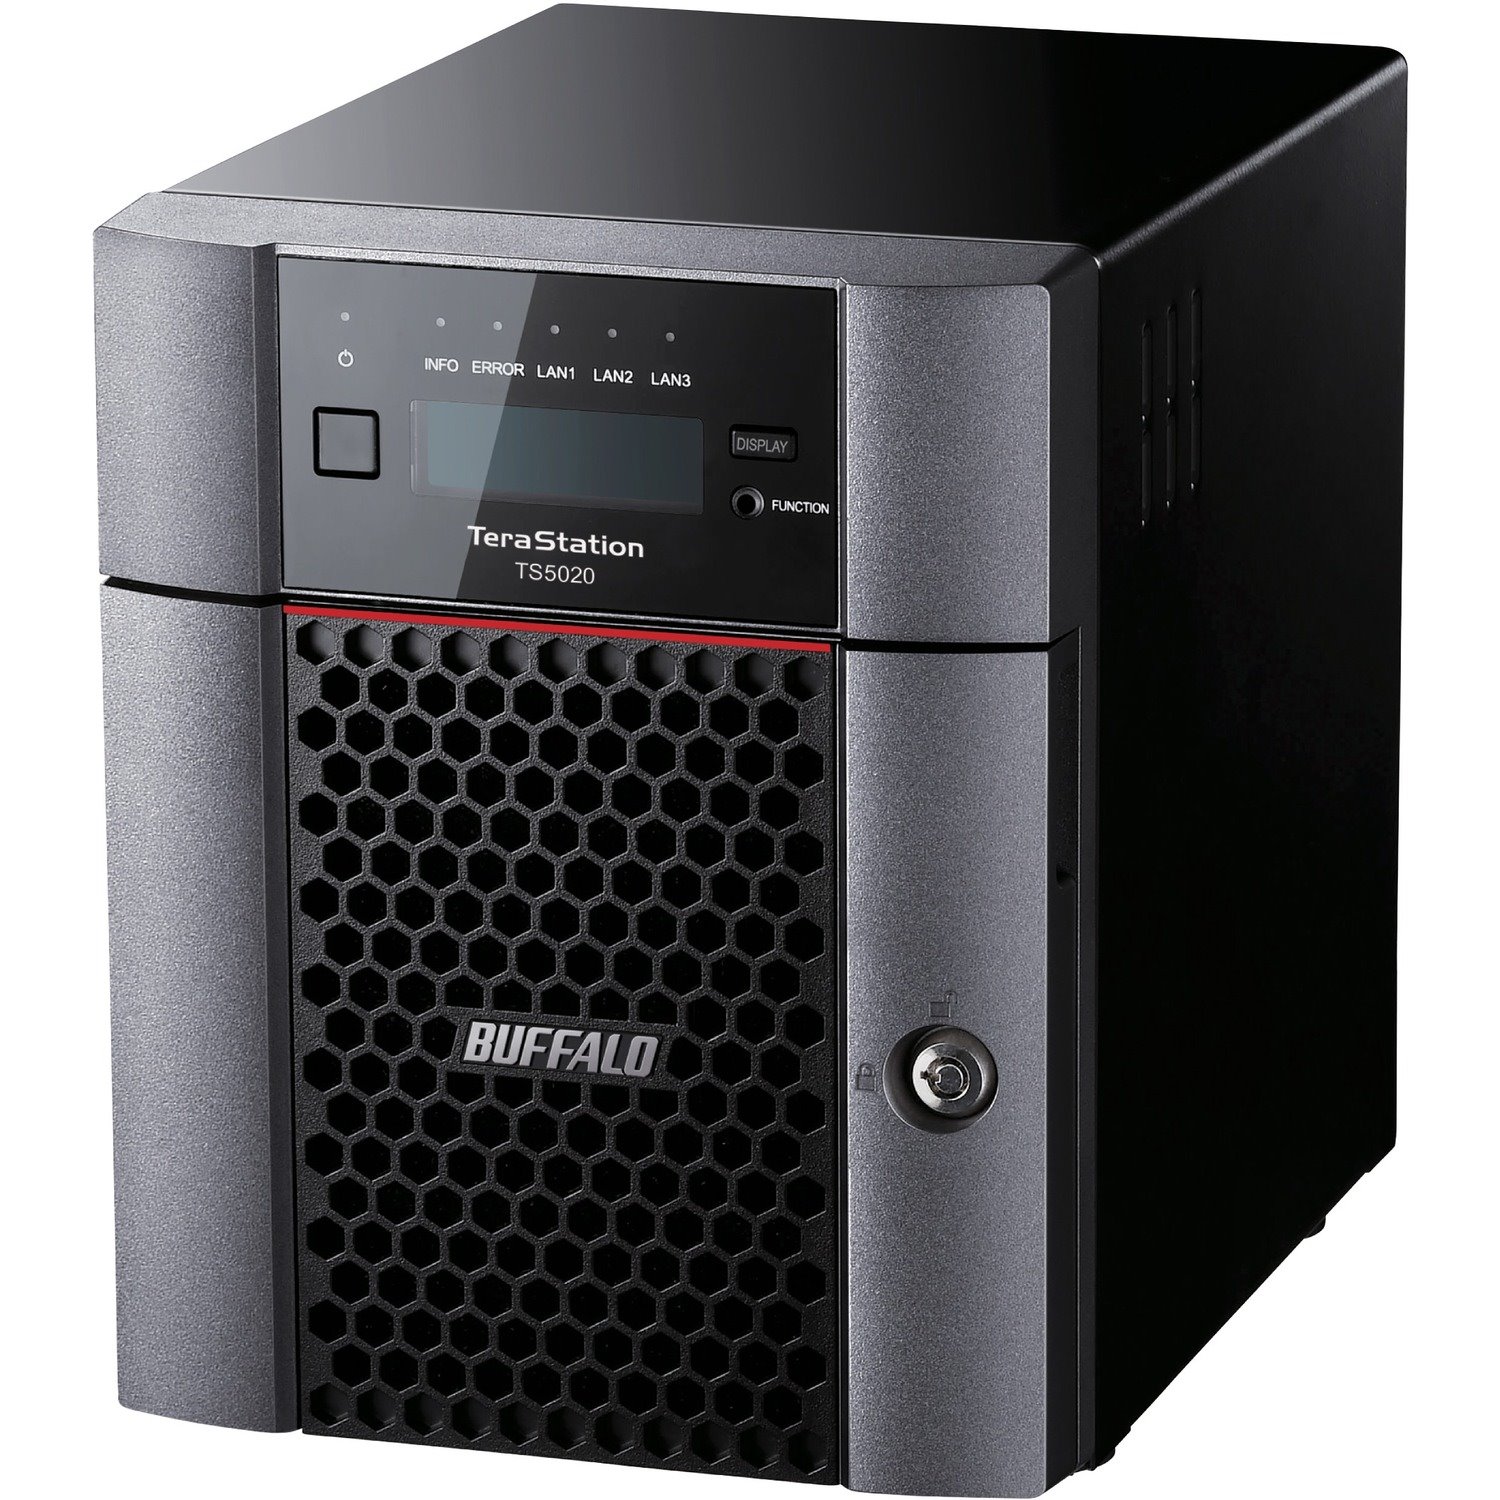 BUFFALO TeraStation 5420 4-Bay 16TB (2x8TB) Business Desktop NAS Storage Hard Drives Included